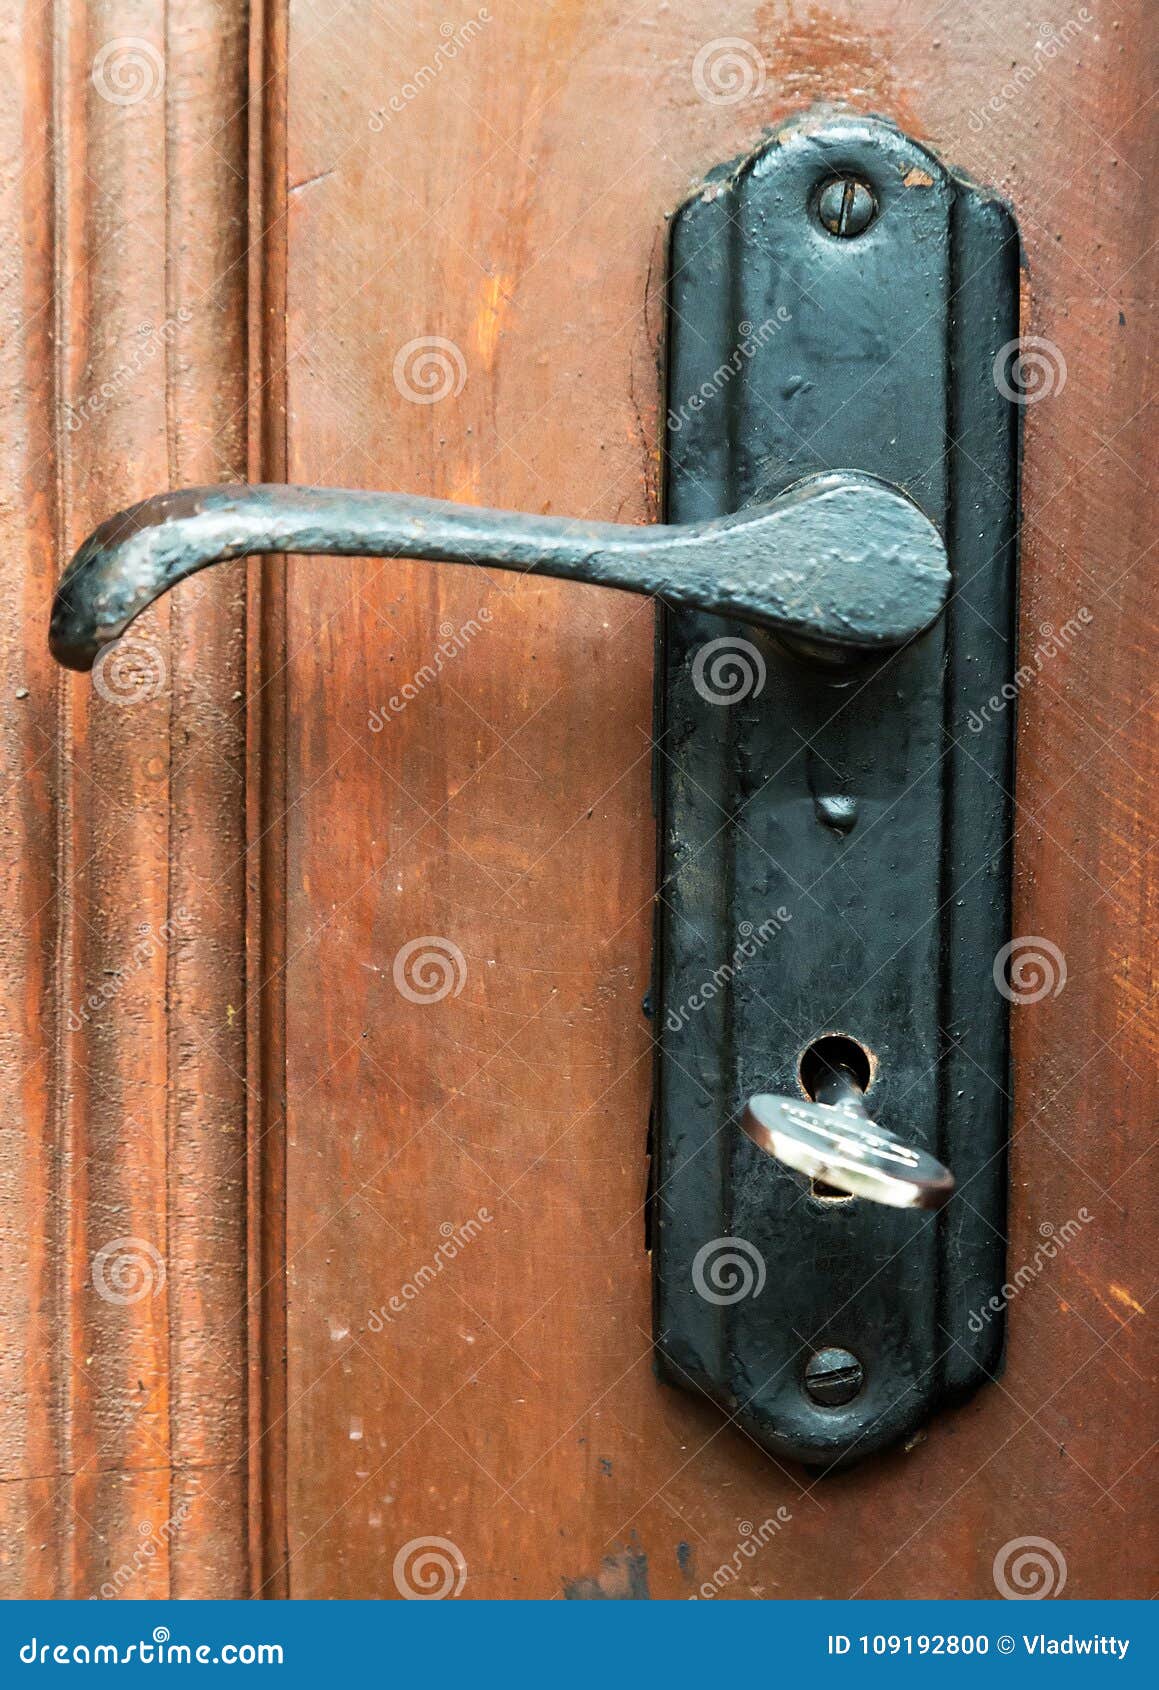 Door Handles, Locks and Keys Old Wooden Stock Photo - Image of grunge ...